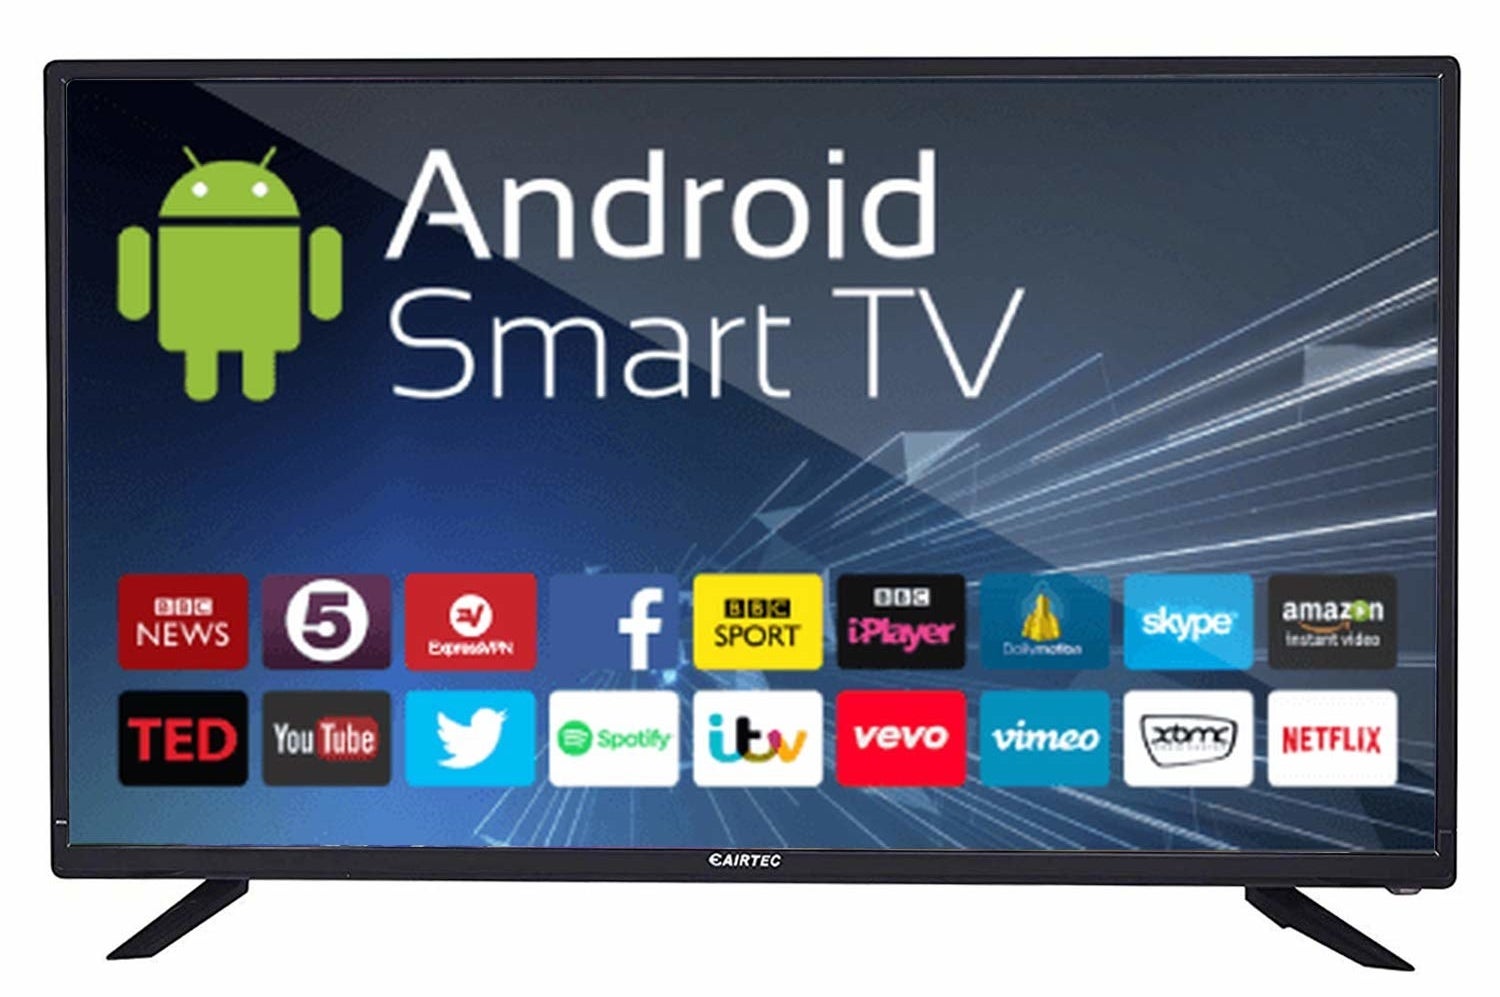 An eAirtec HD Ready Smart LED TV in black.